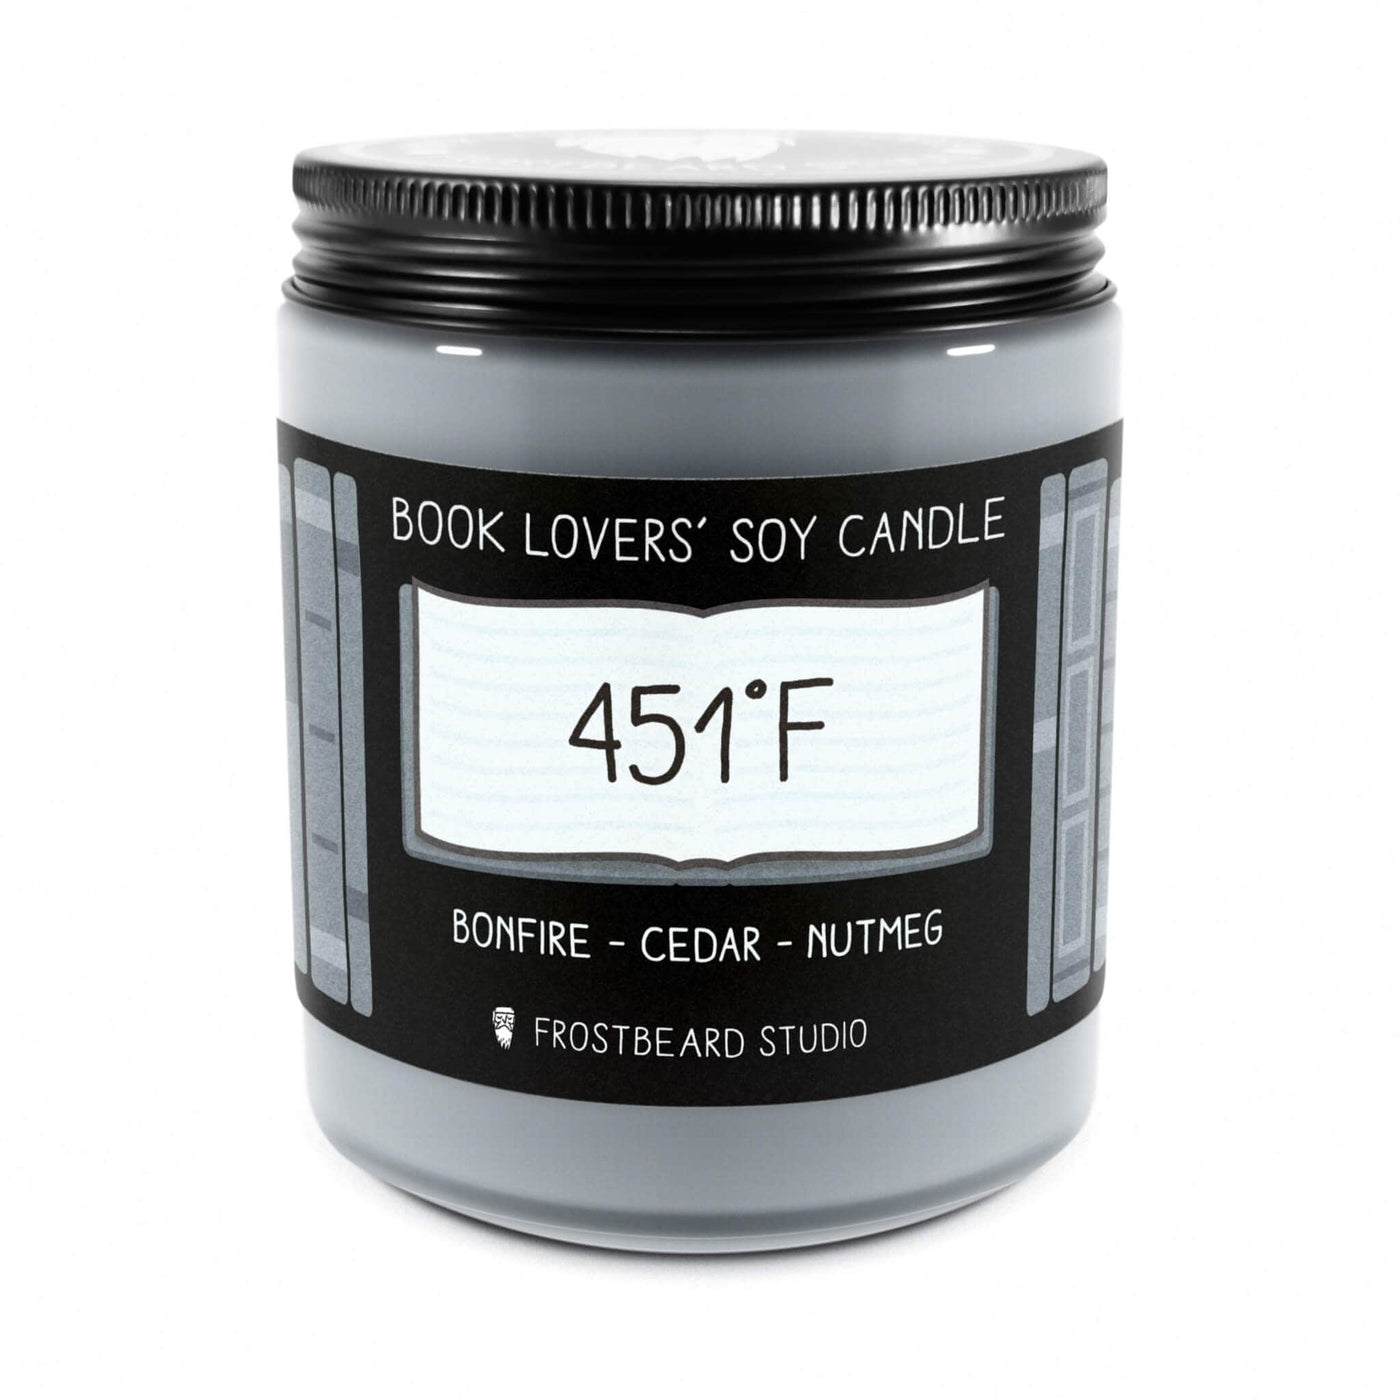 451°F  -  8 oz Jar  -  Book Lovers' Soy Candle  -  Frostbeard Studio